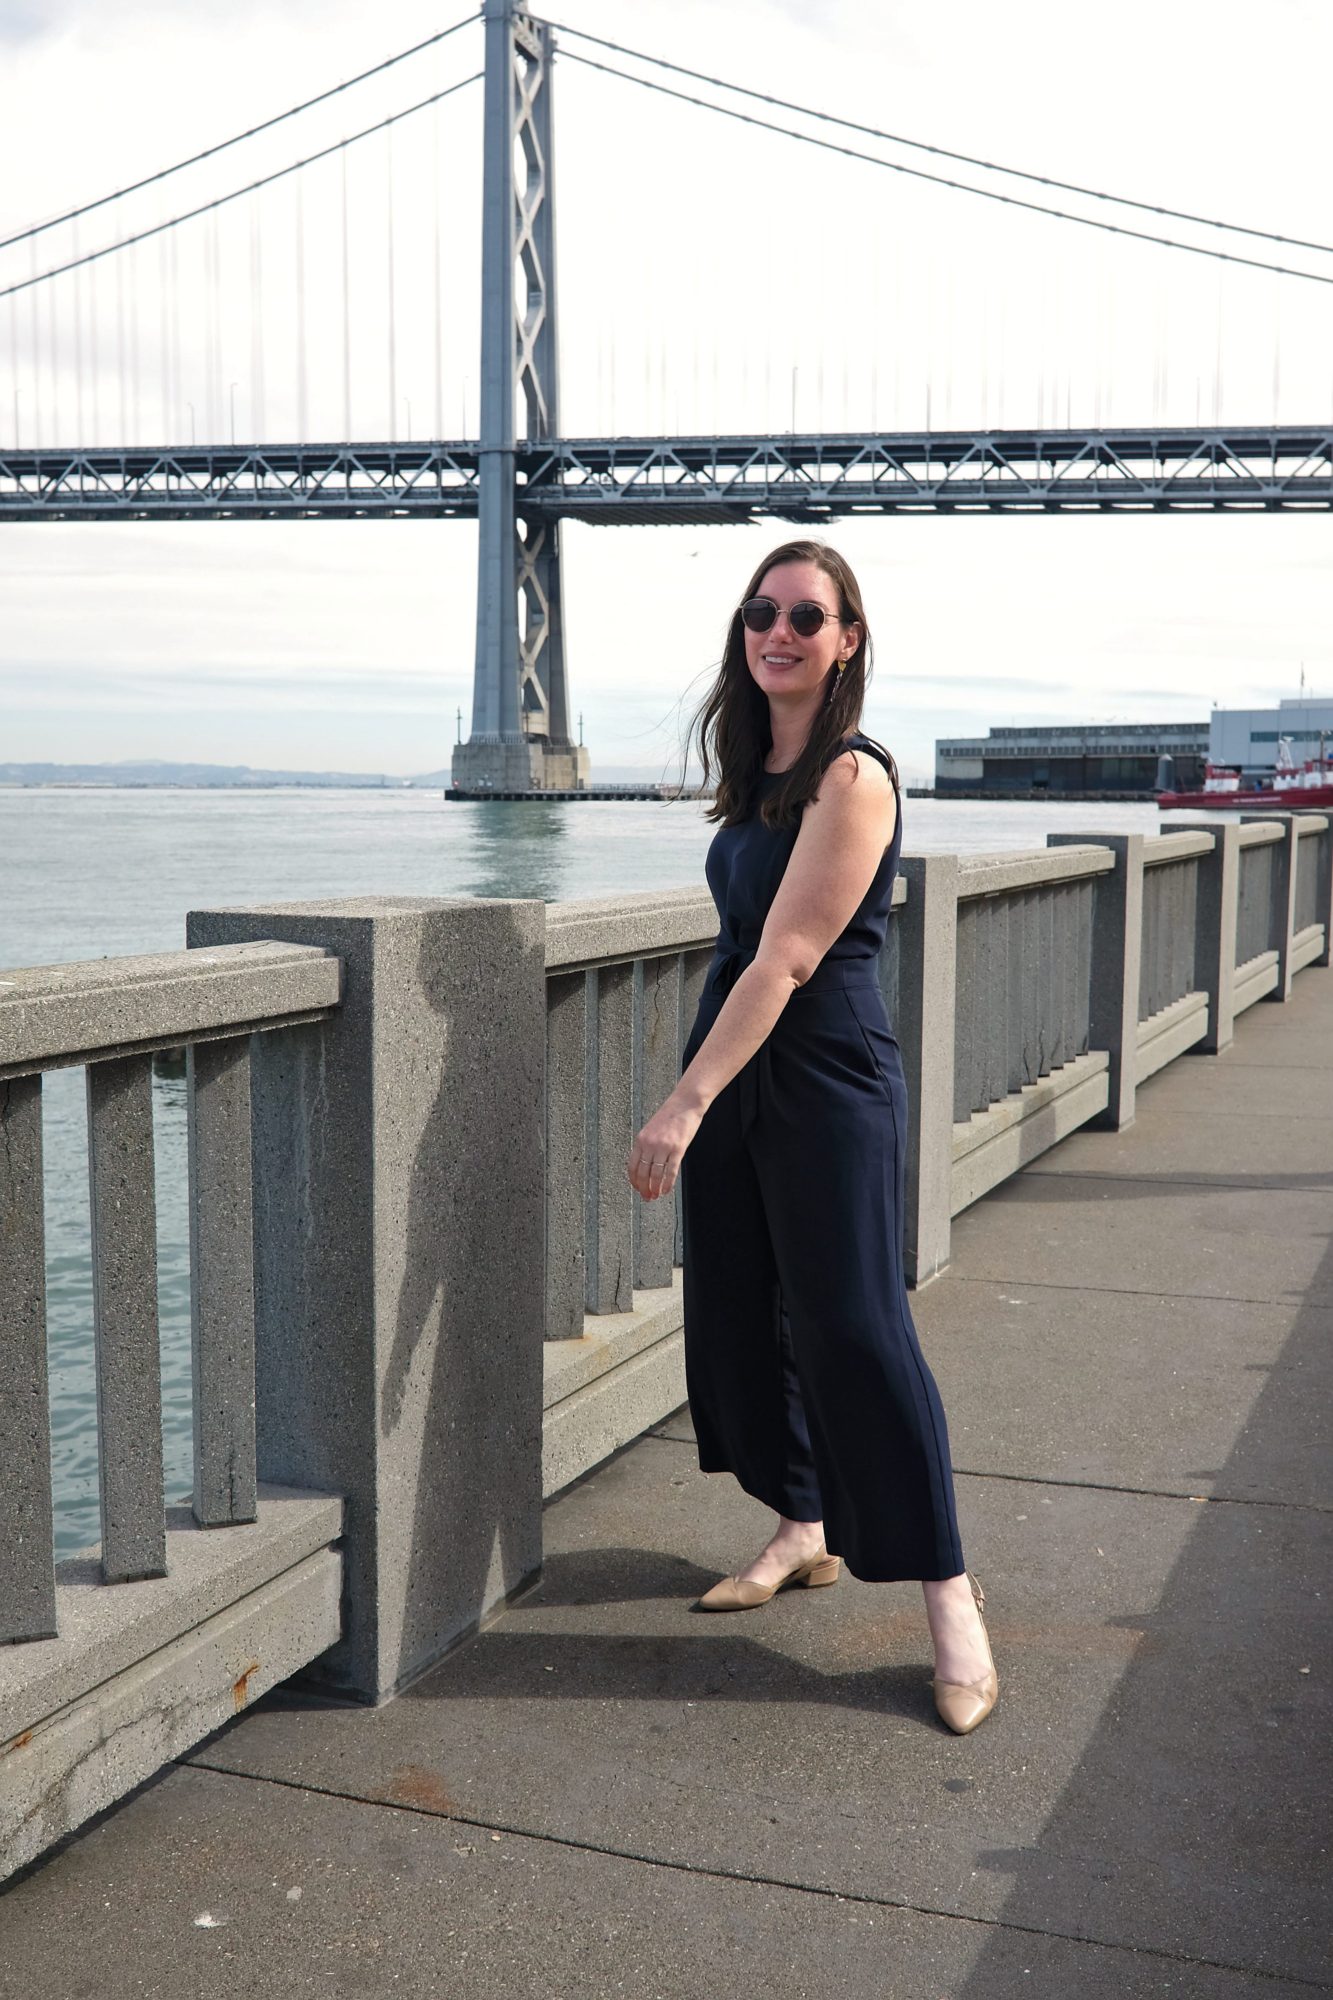 Alyssa stands in front of a bridge in San Francisco